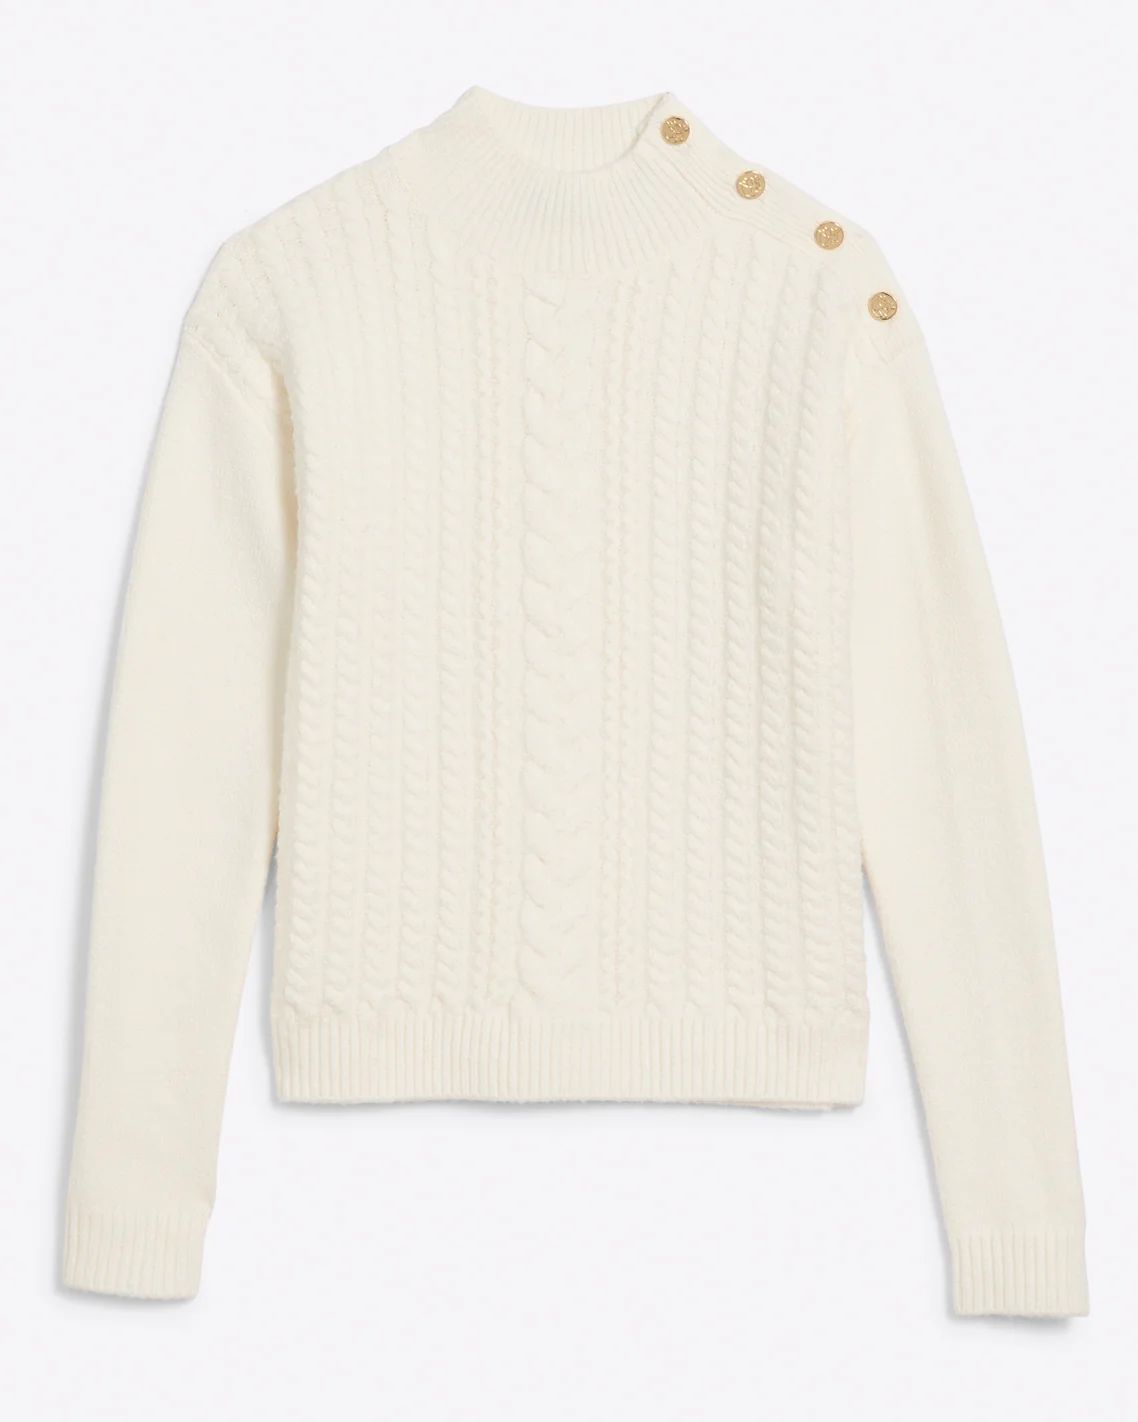 Cableknit Turtleneck Sweater in Magnolia White | Draper James (US)